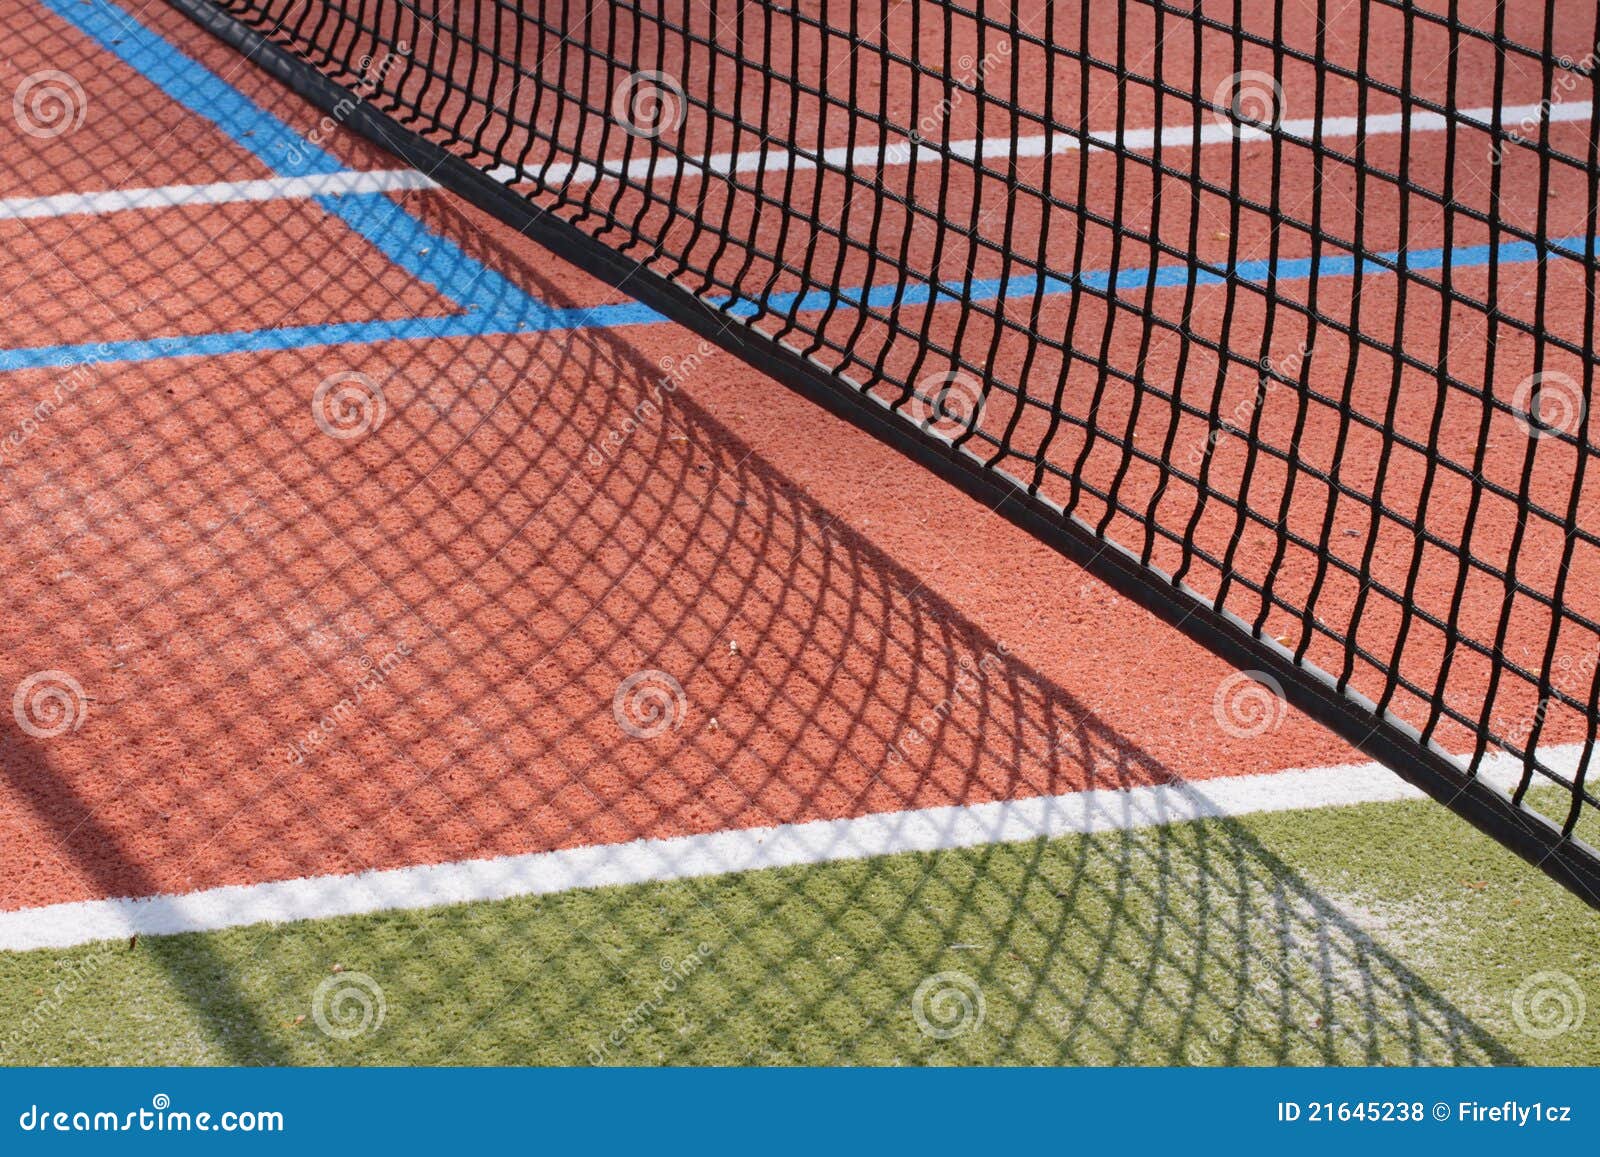 tenis court